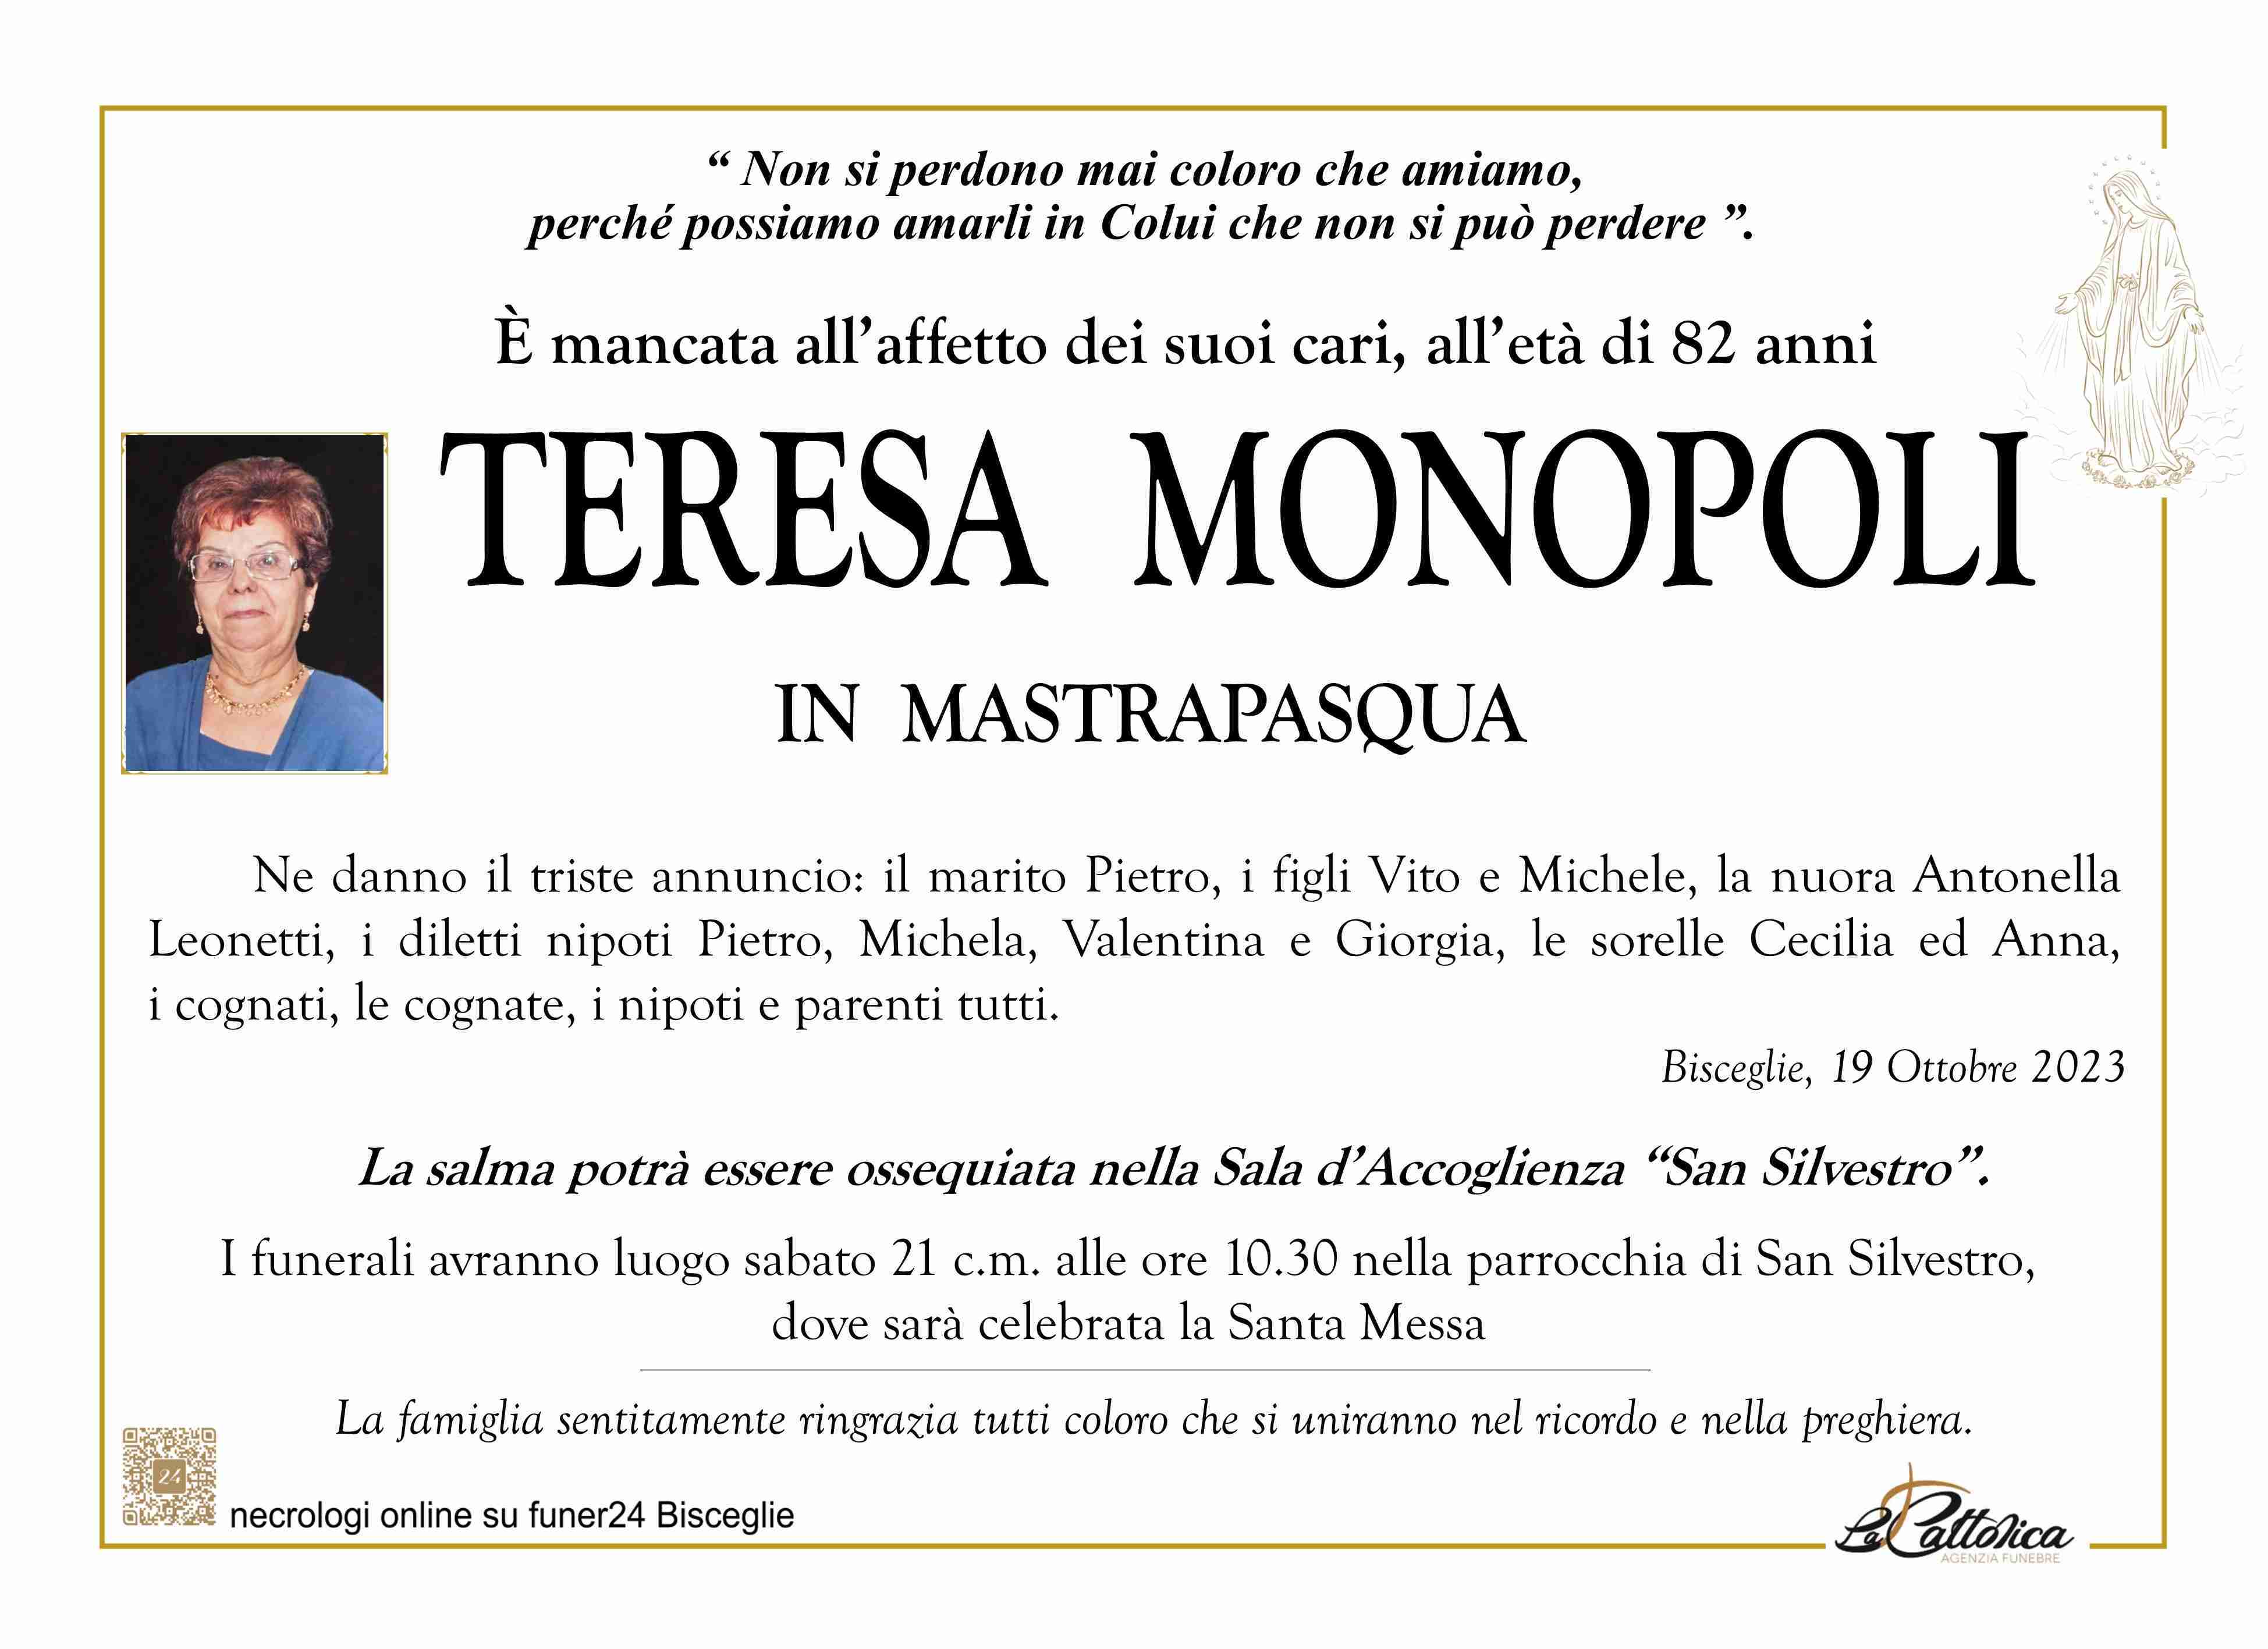 Teresa Monopoli